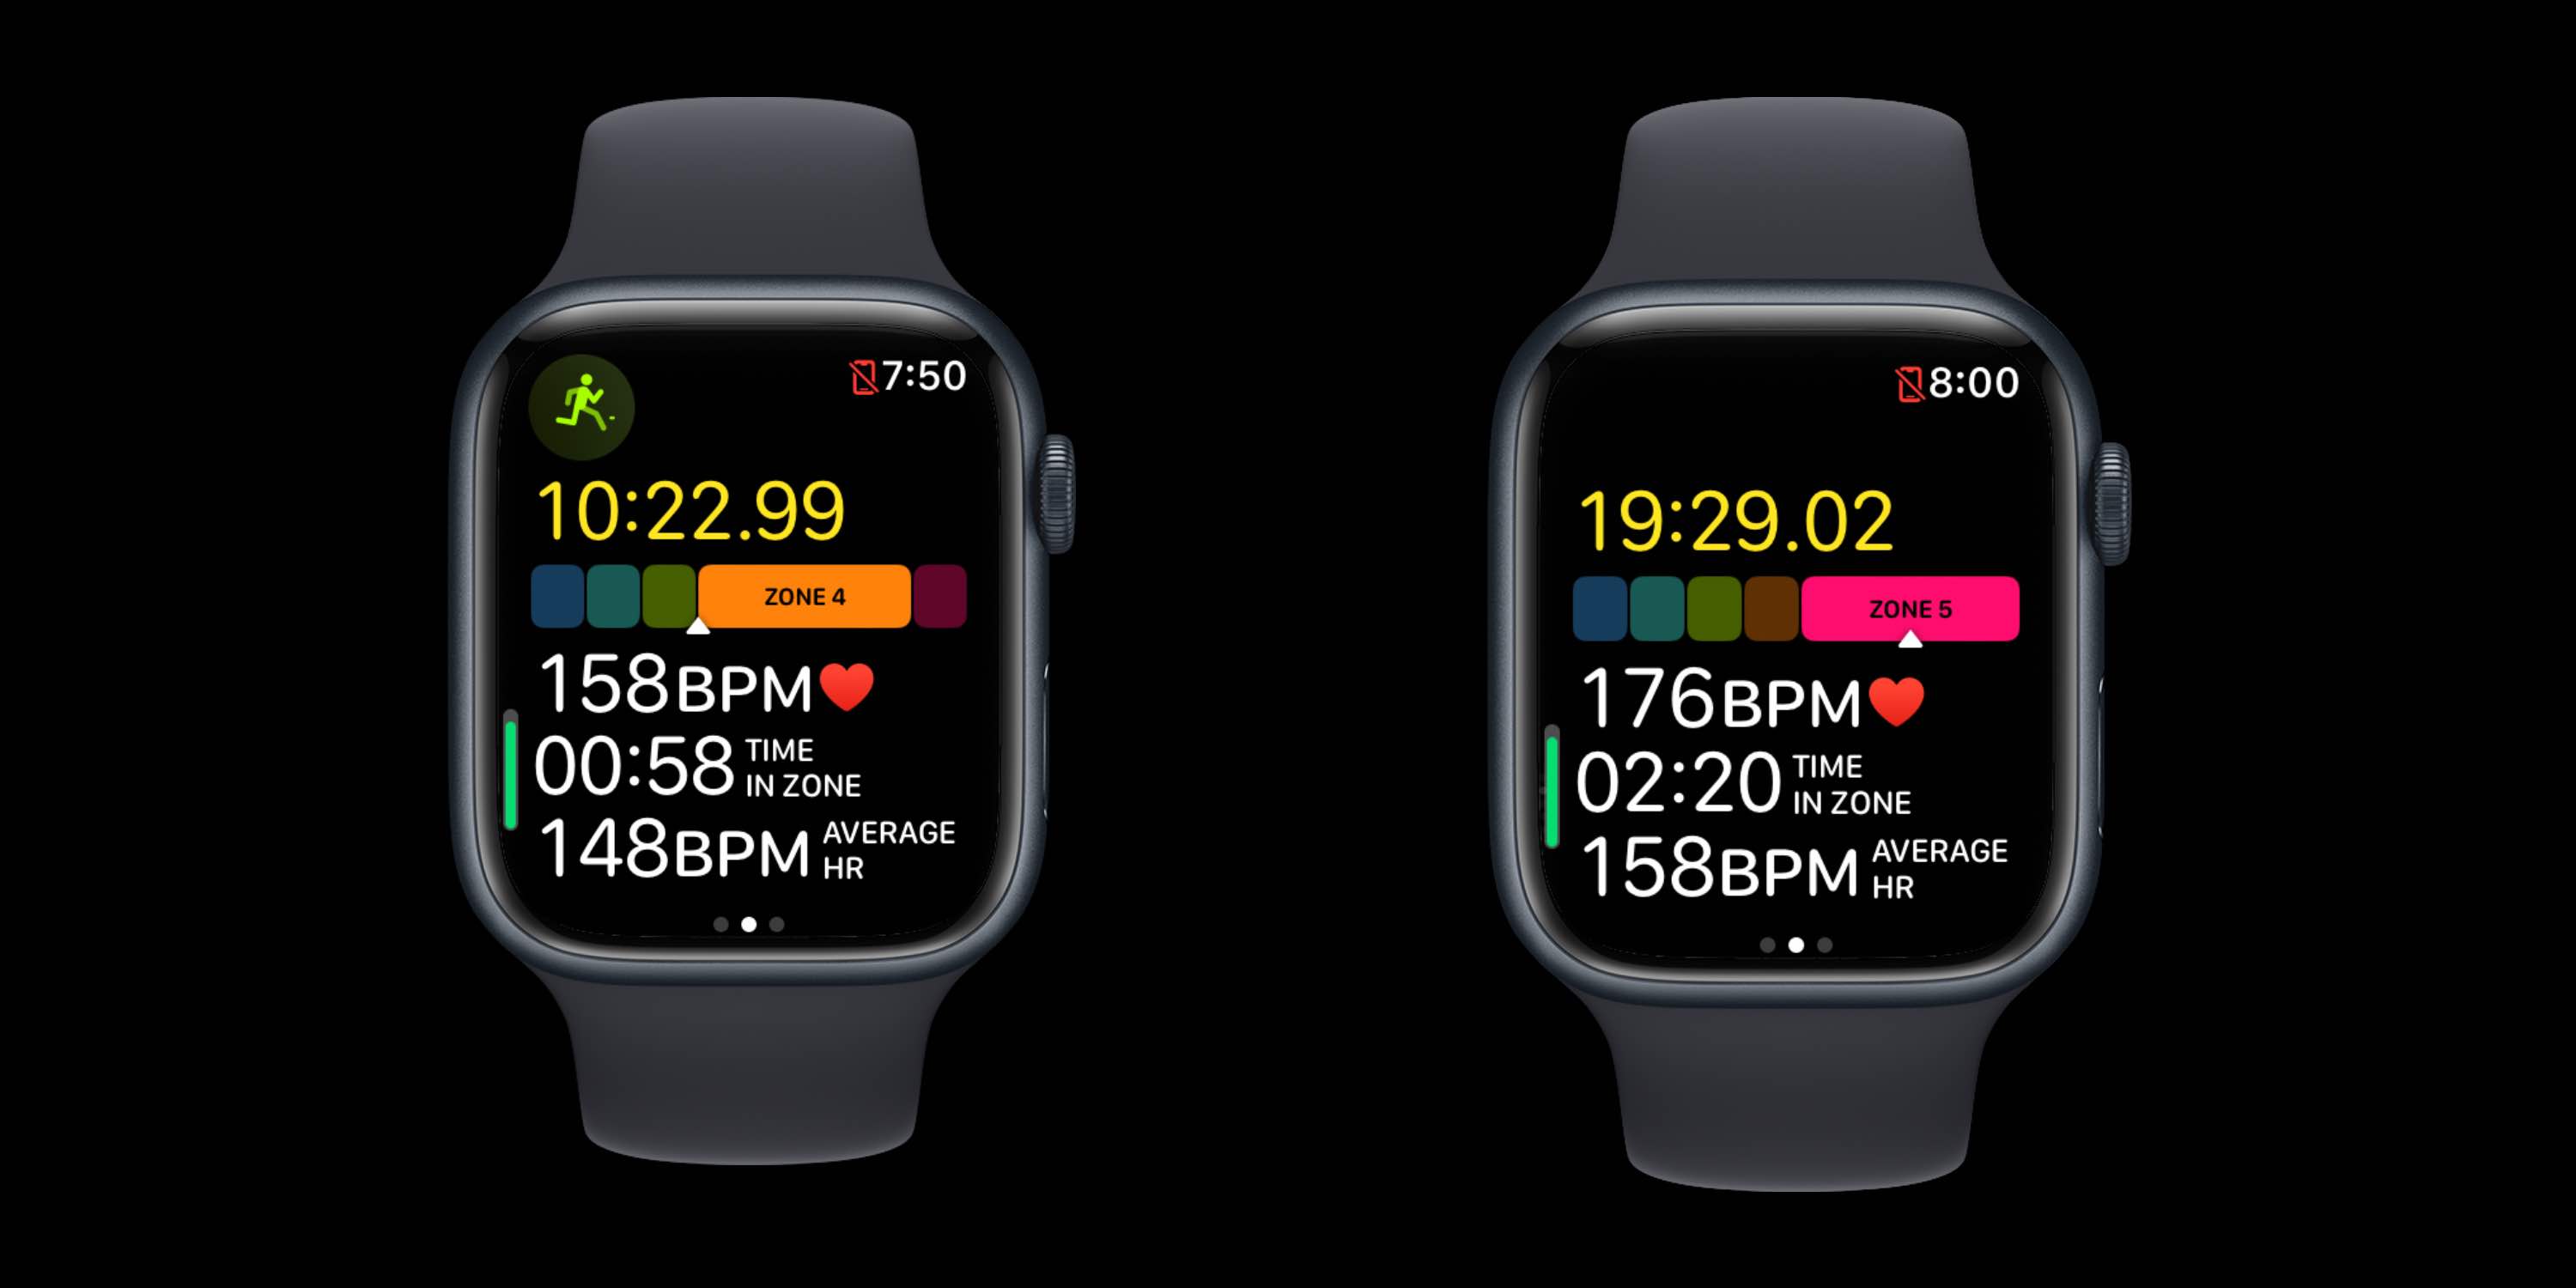 Apple Watch triggers heart rate measurements in 2 . zones